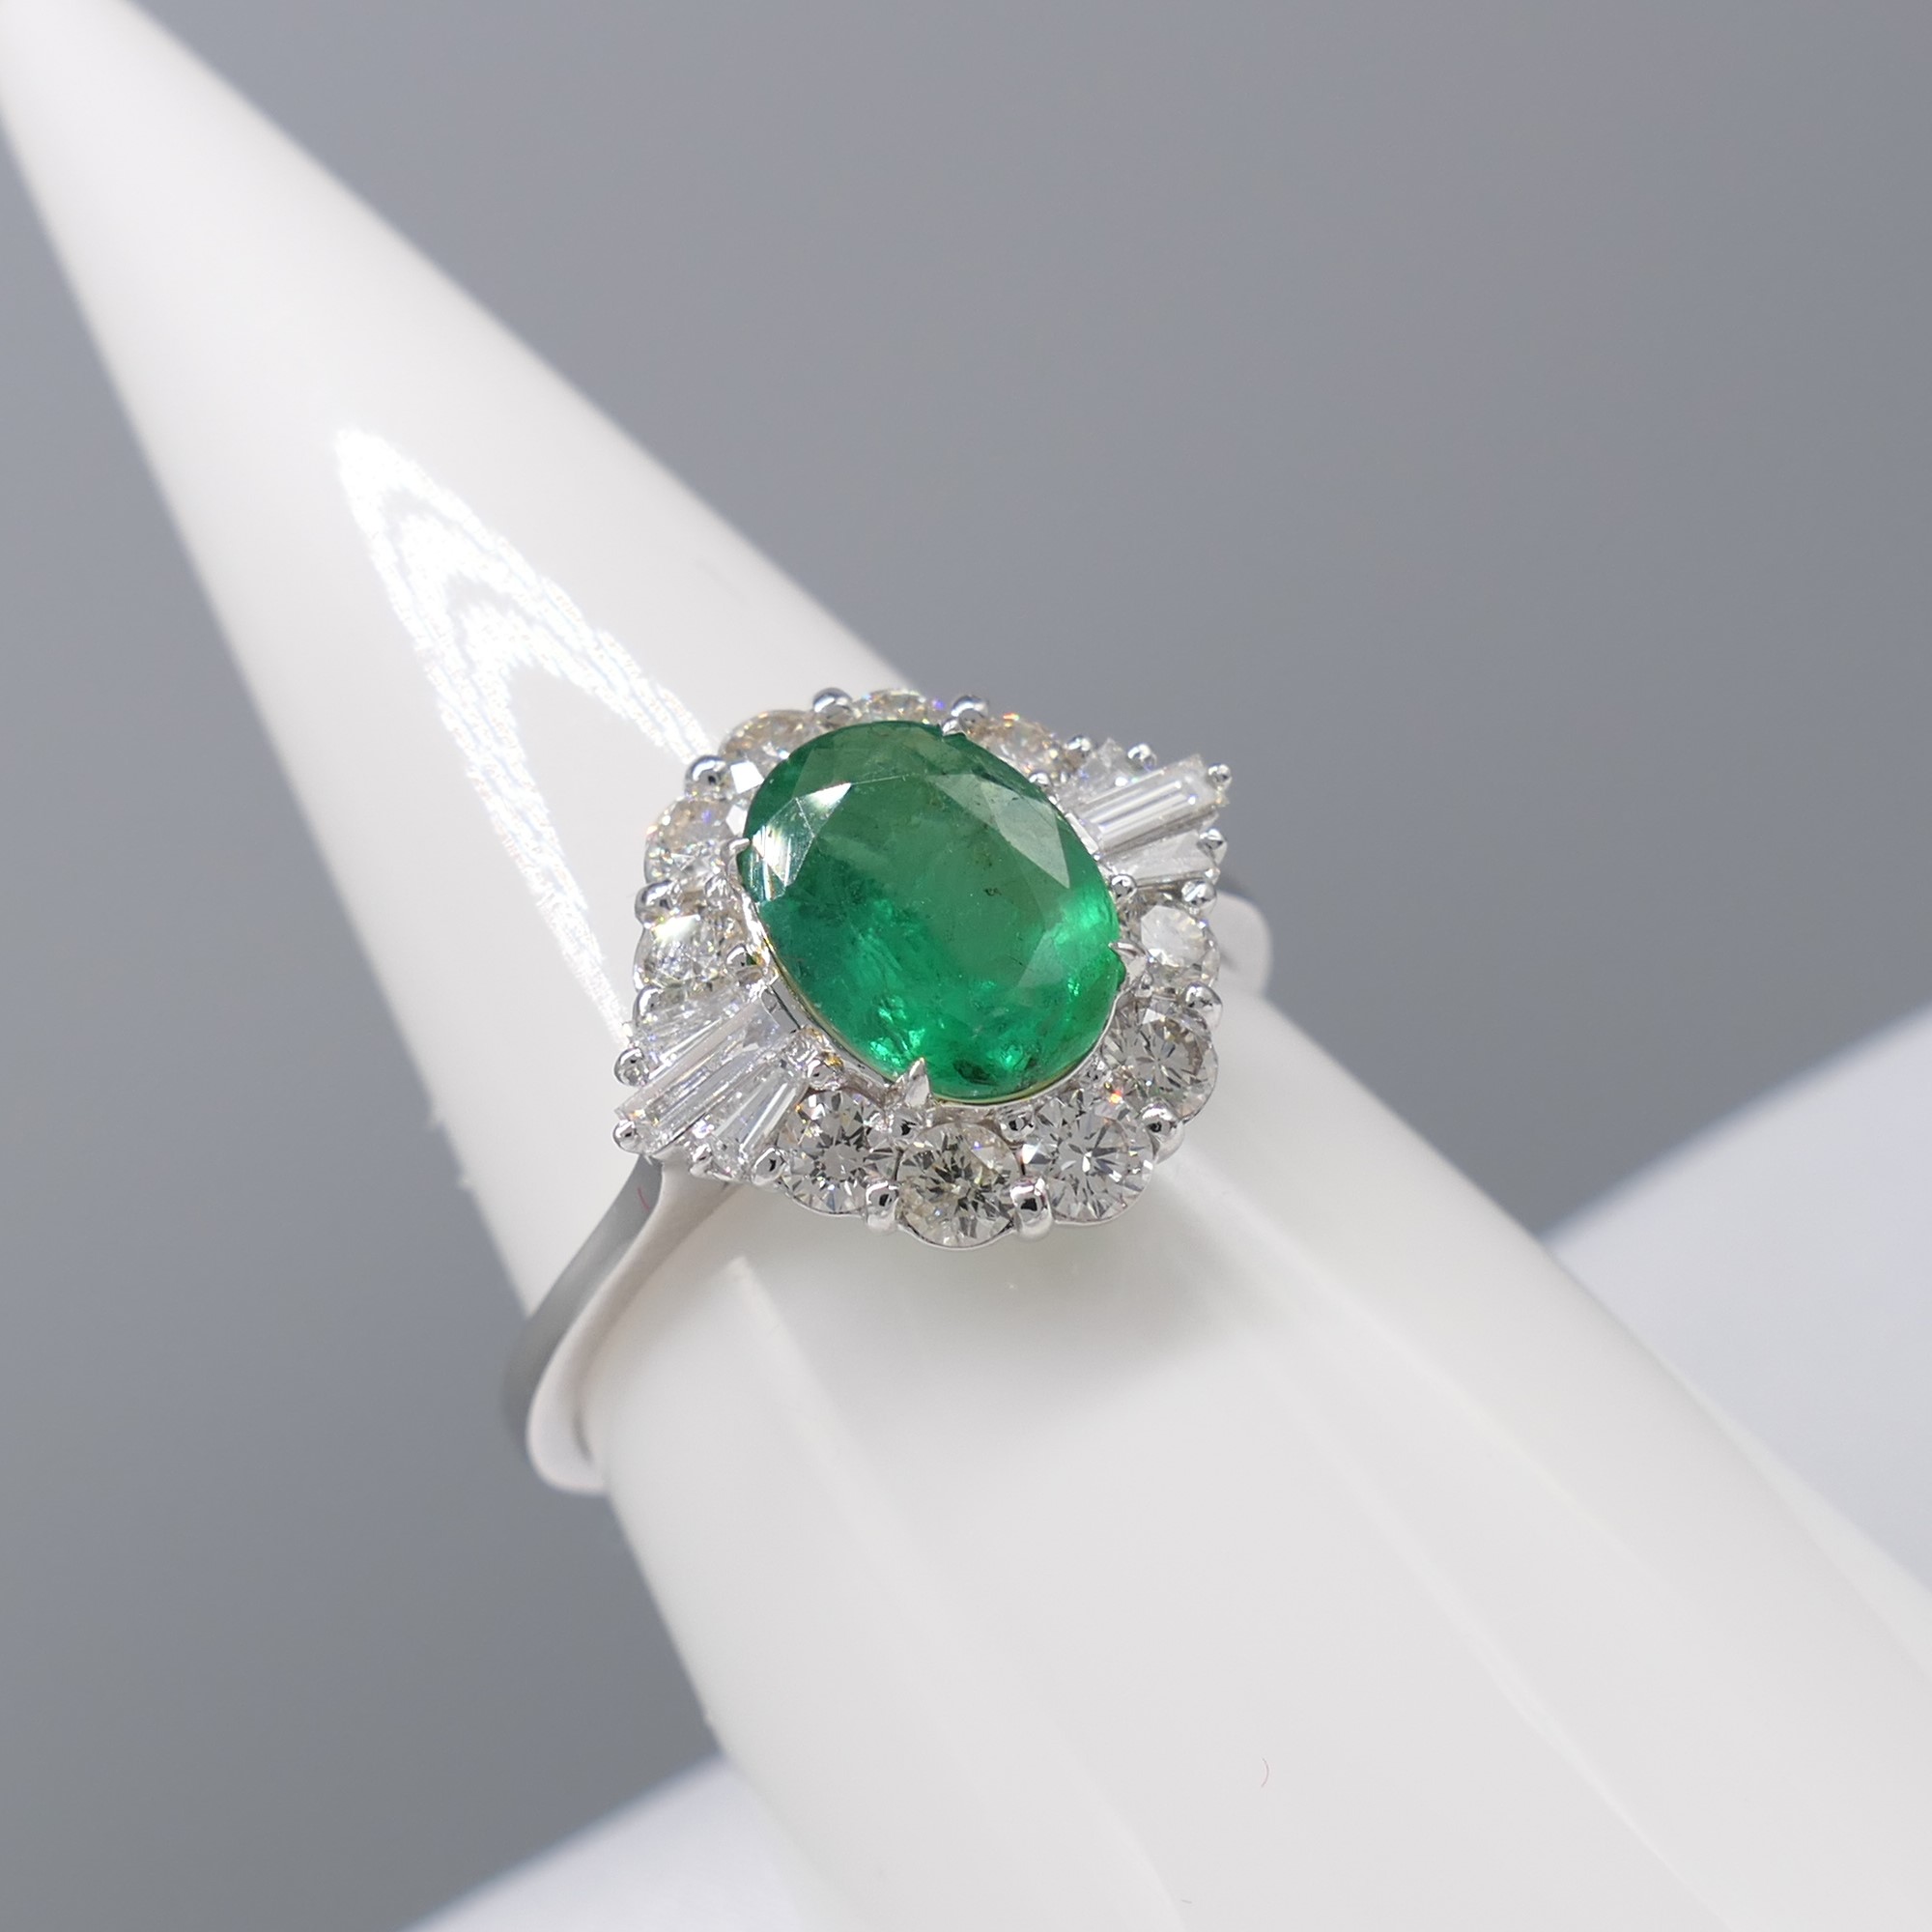 Stylish 1.05 carat emerald and diamond dress ring - Image 3 of 8